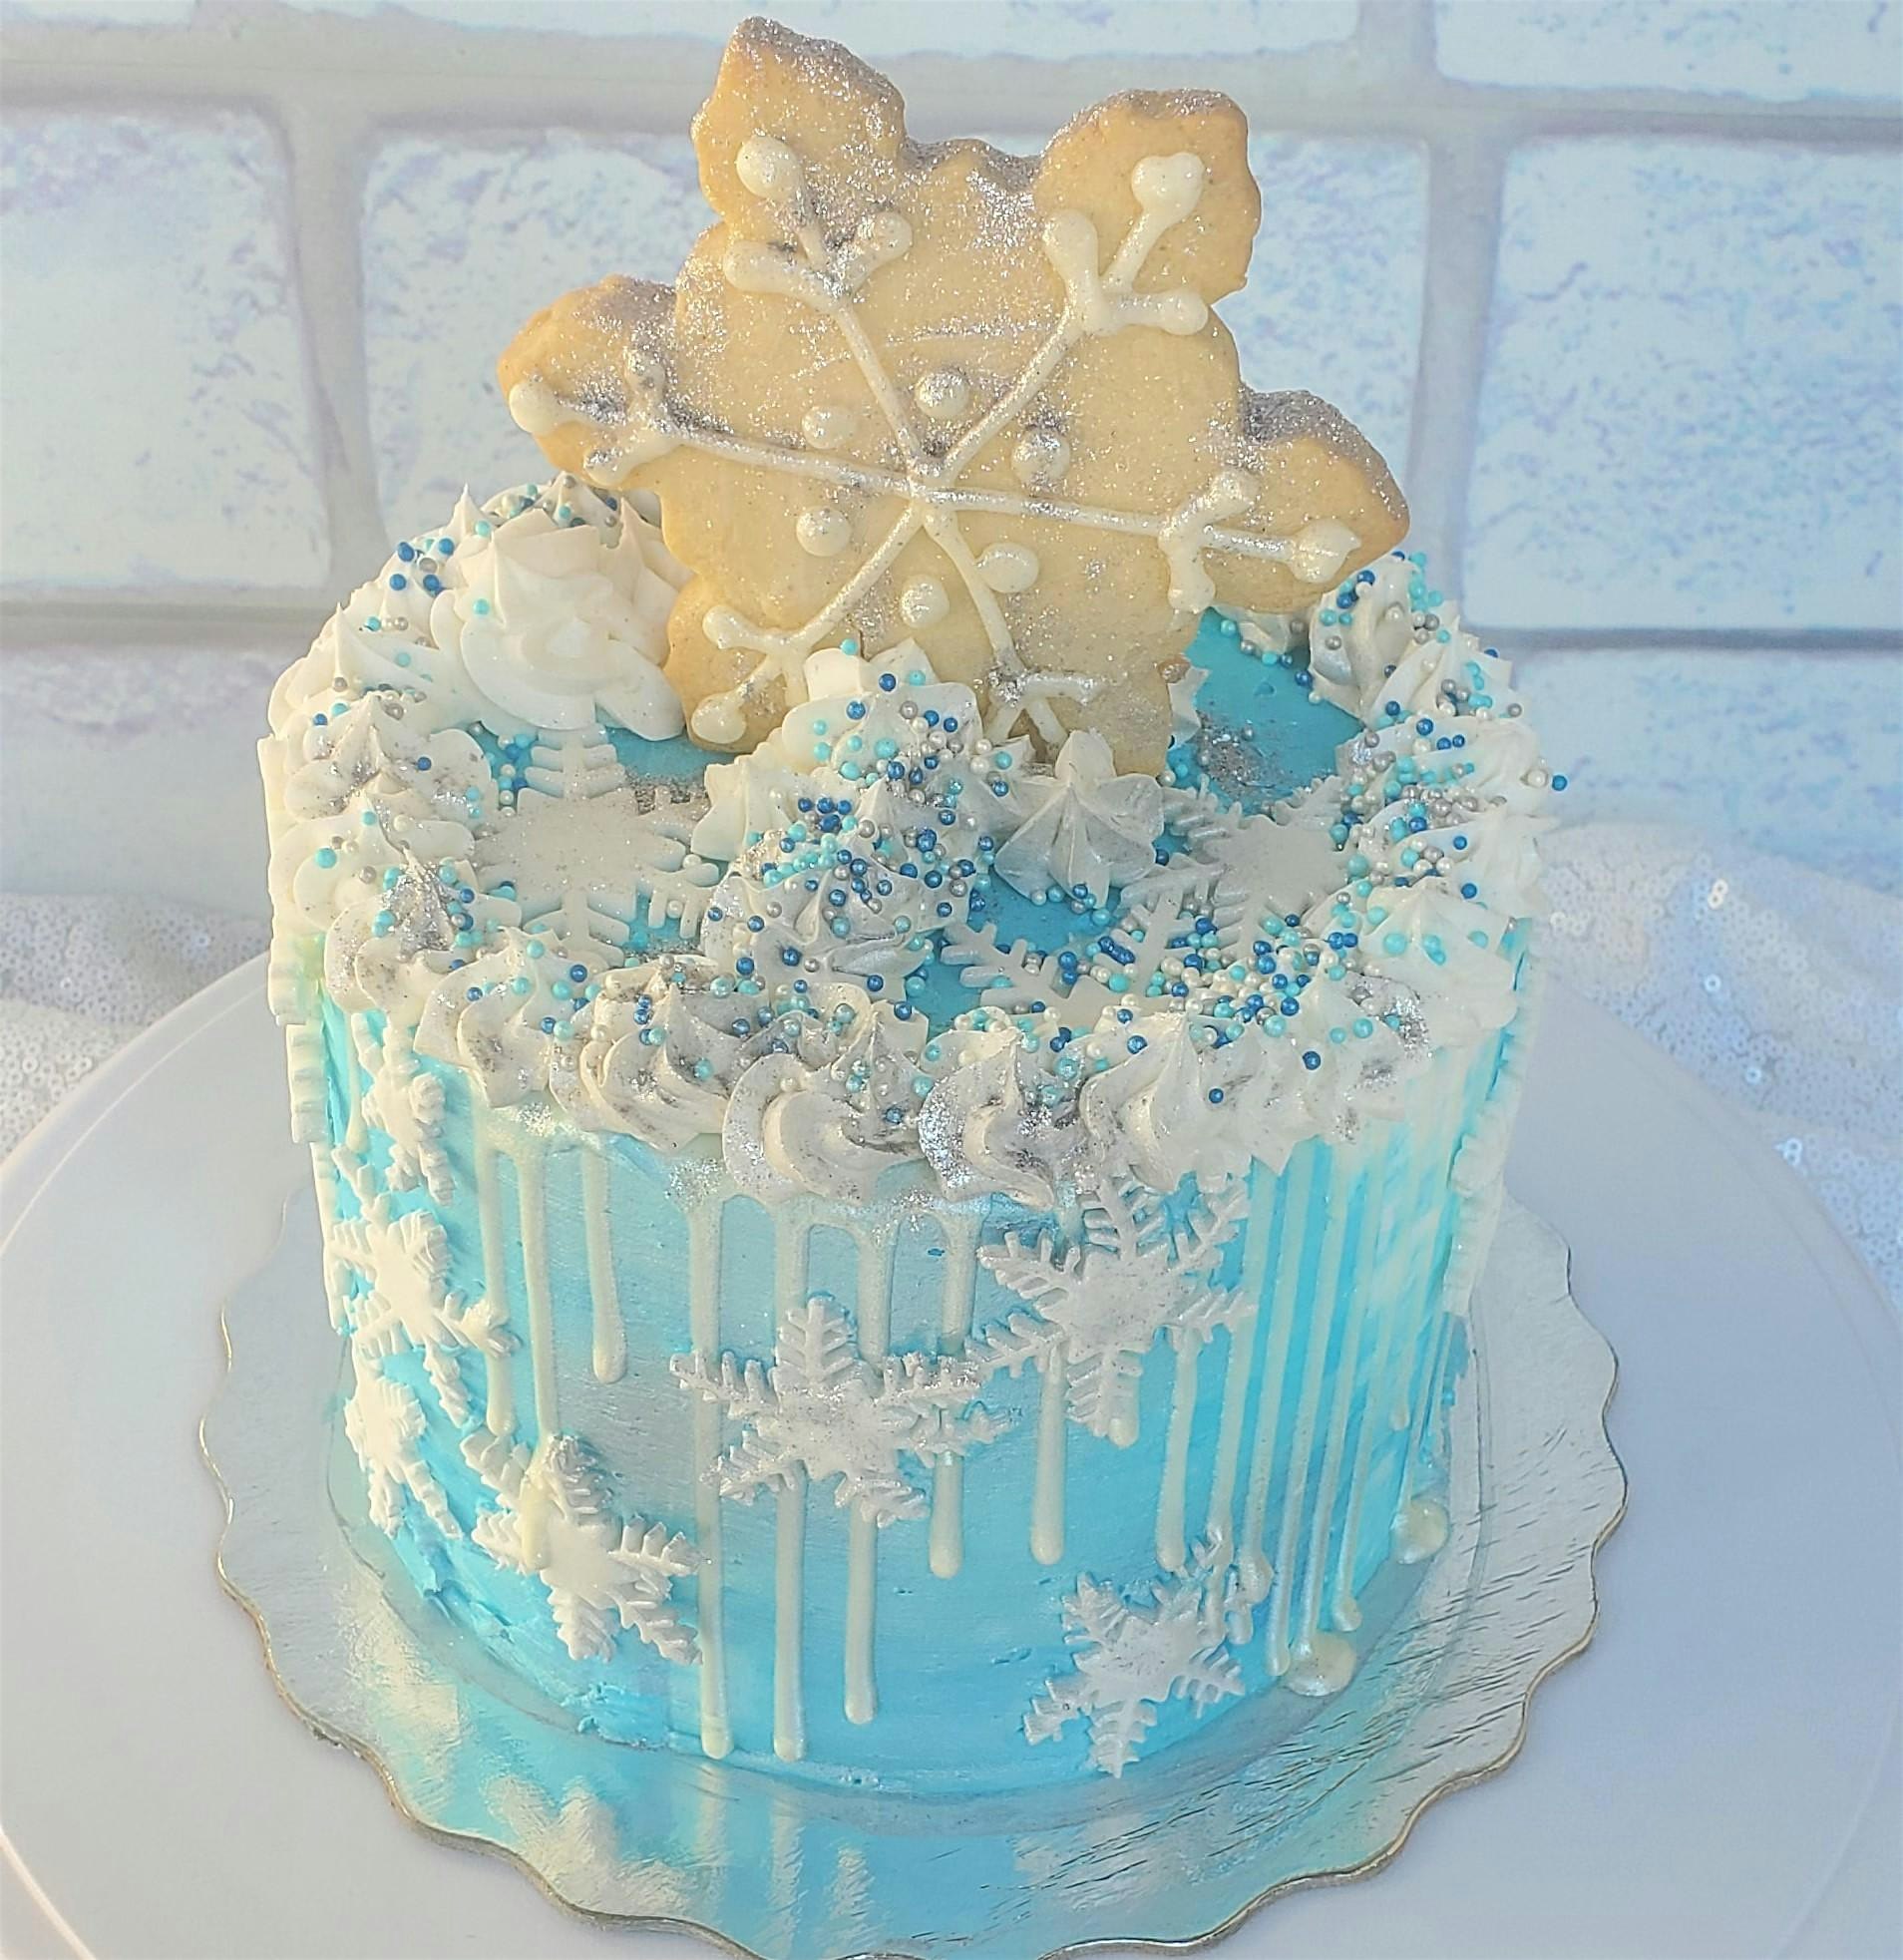 Parent & Me Snow Themed Drip Cake Decorating Class